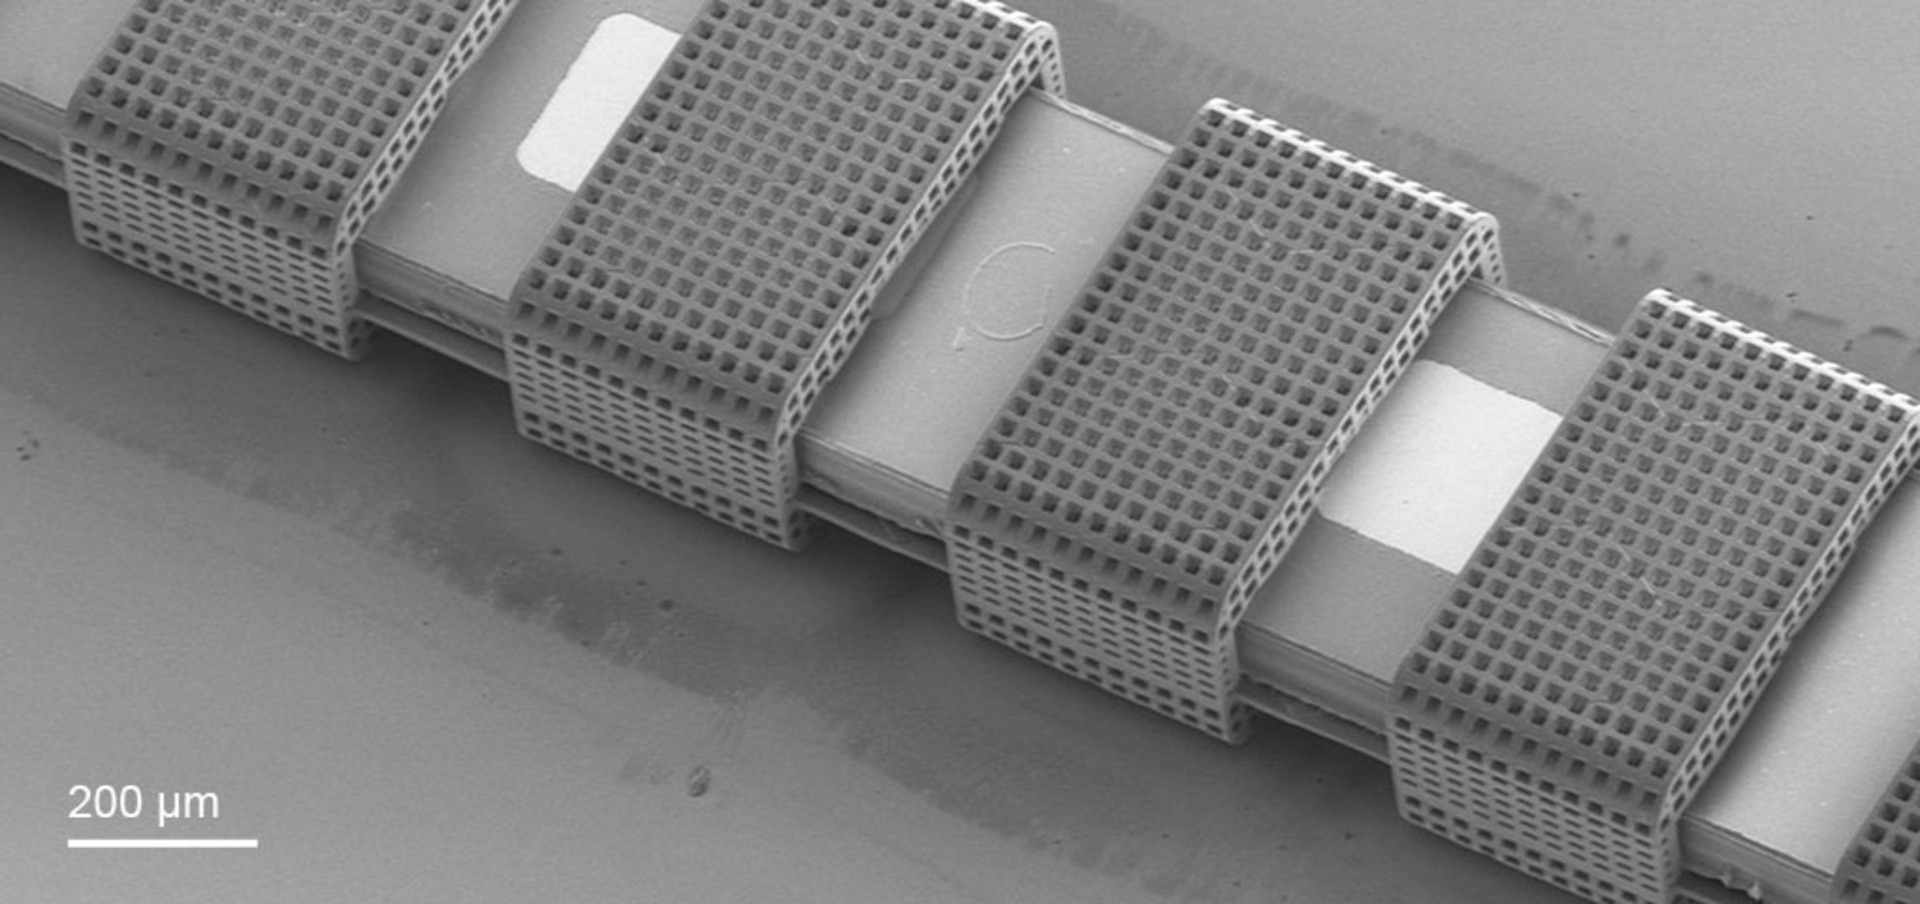 3D printed-microscaffolds mounted onto a 2D MEMS flexible electrode array.